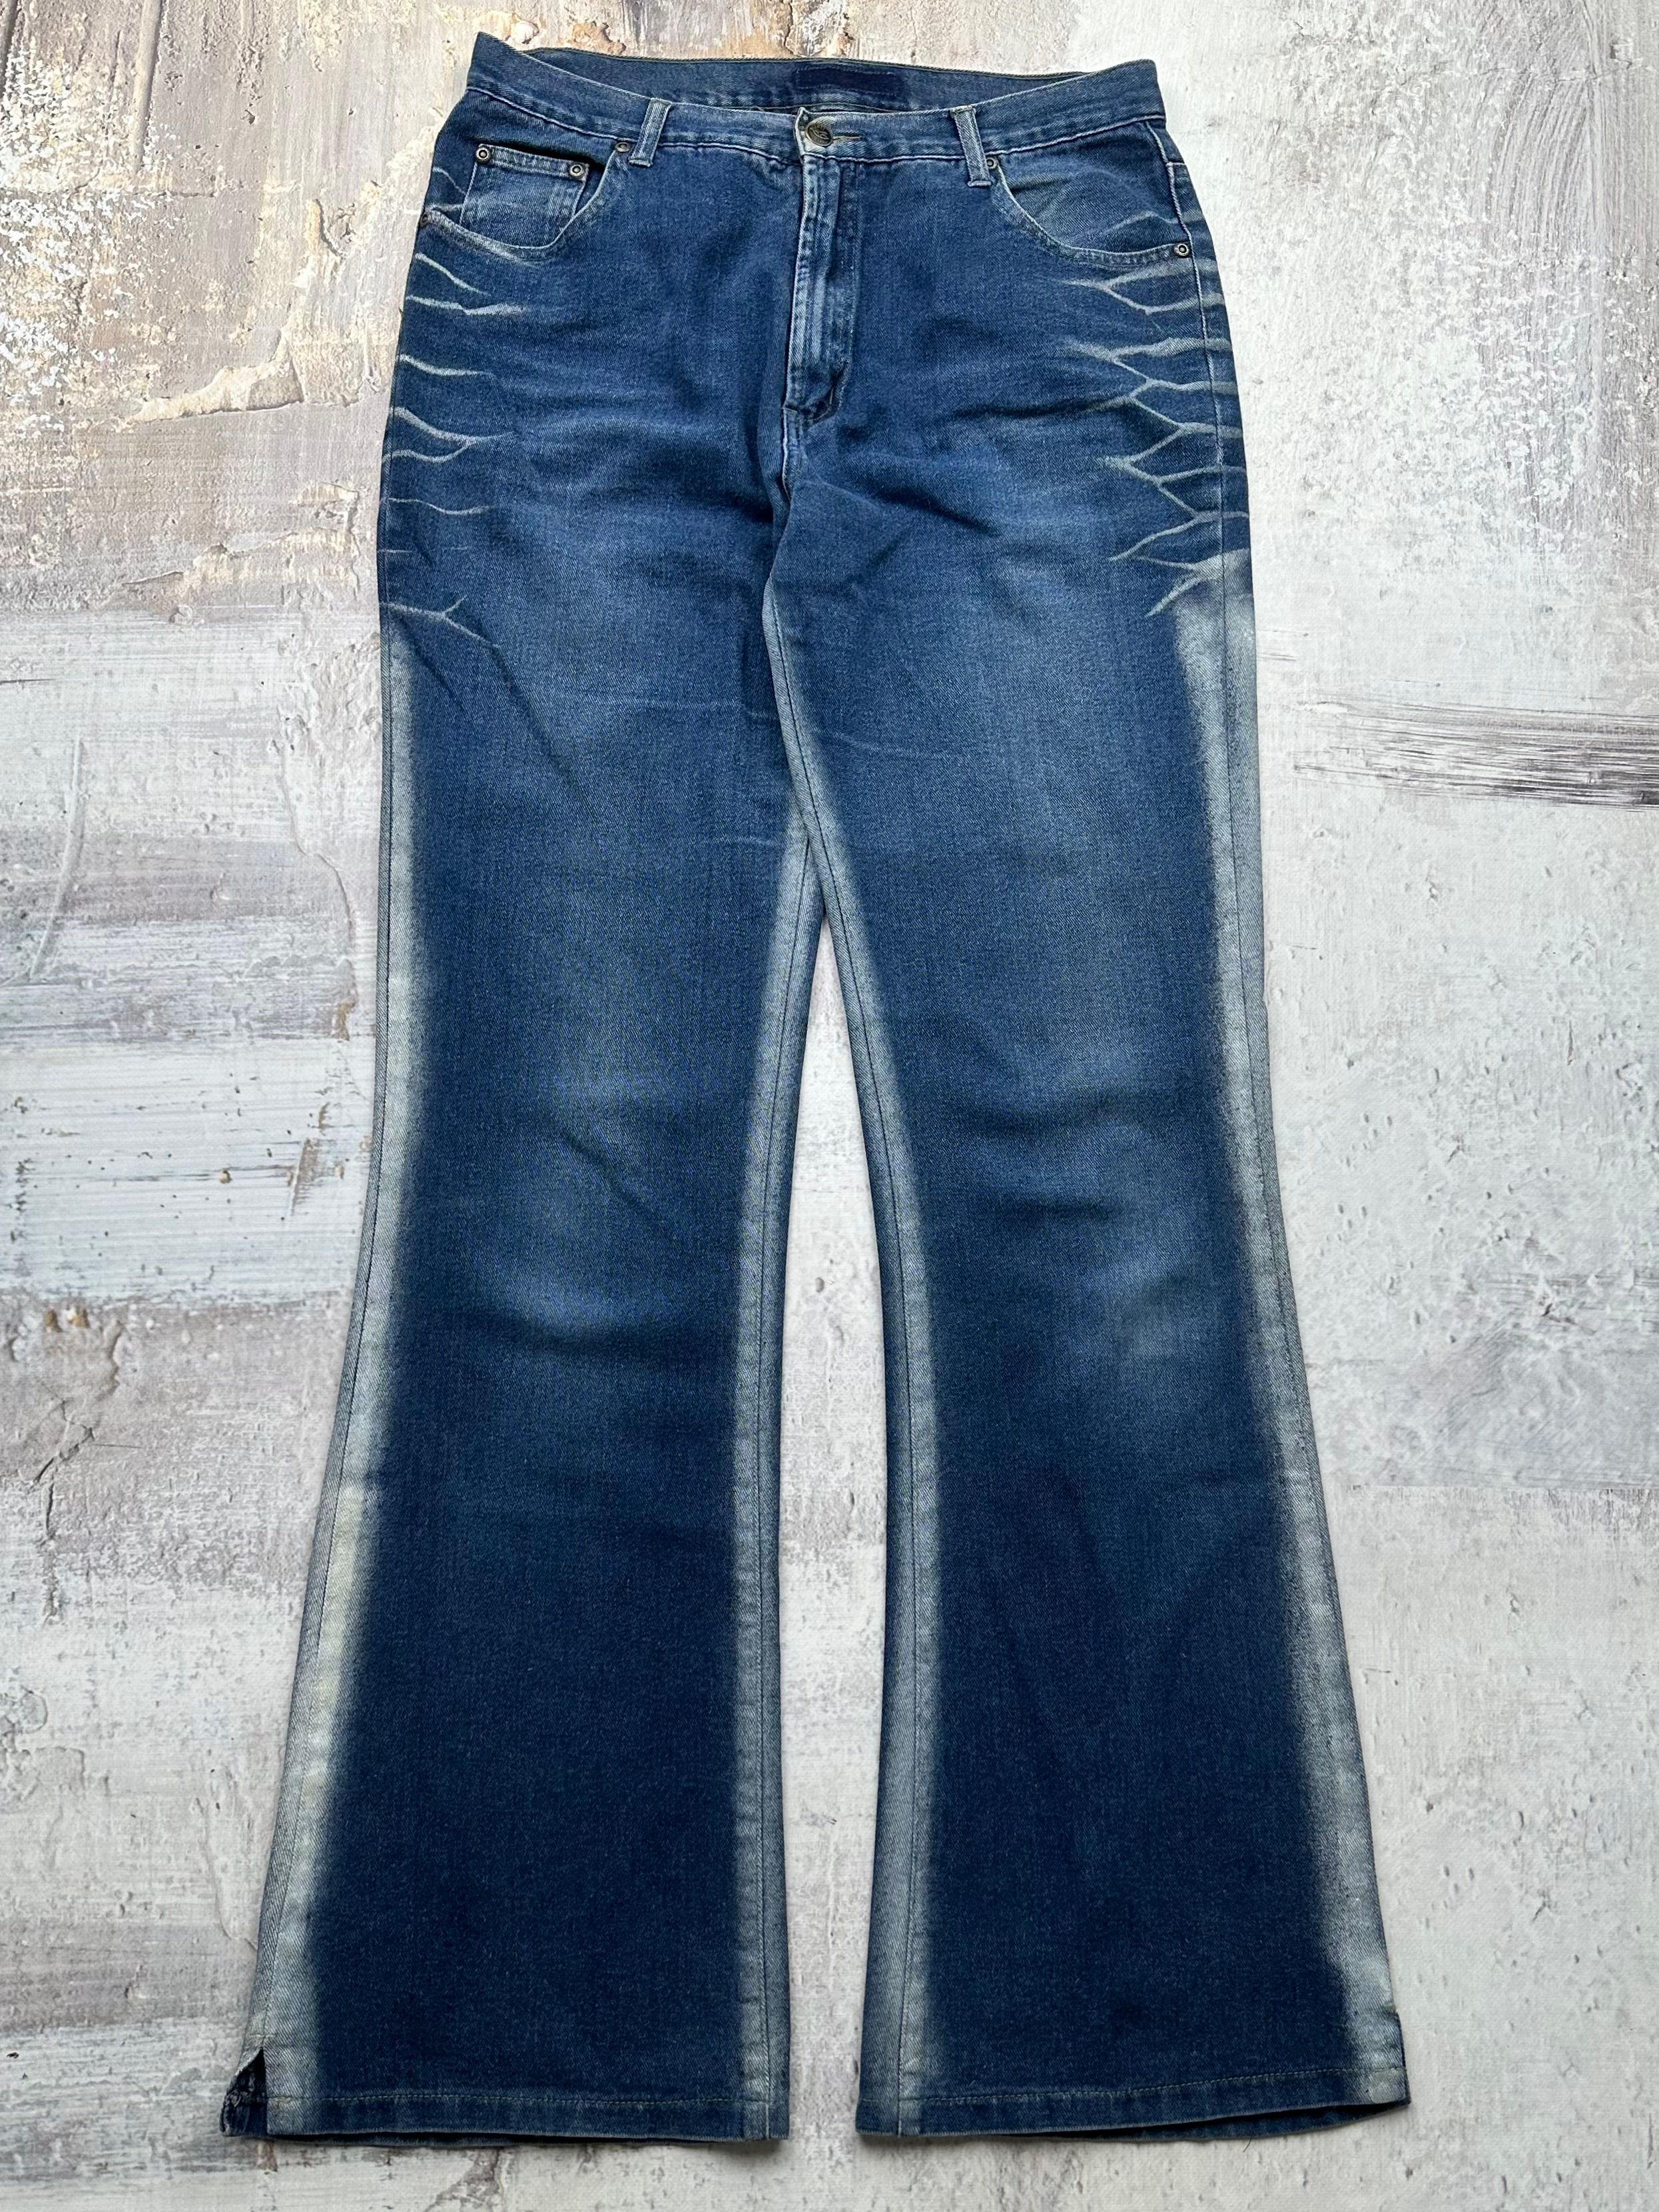 Vintage Vintage Faded Flare Jeans | Grailed